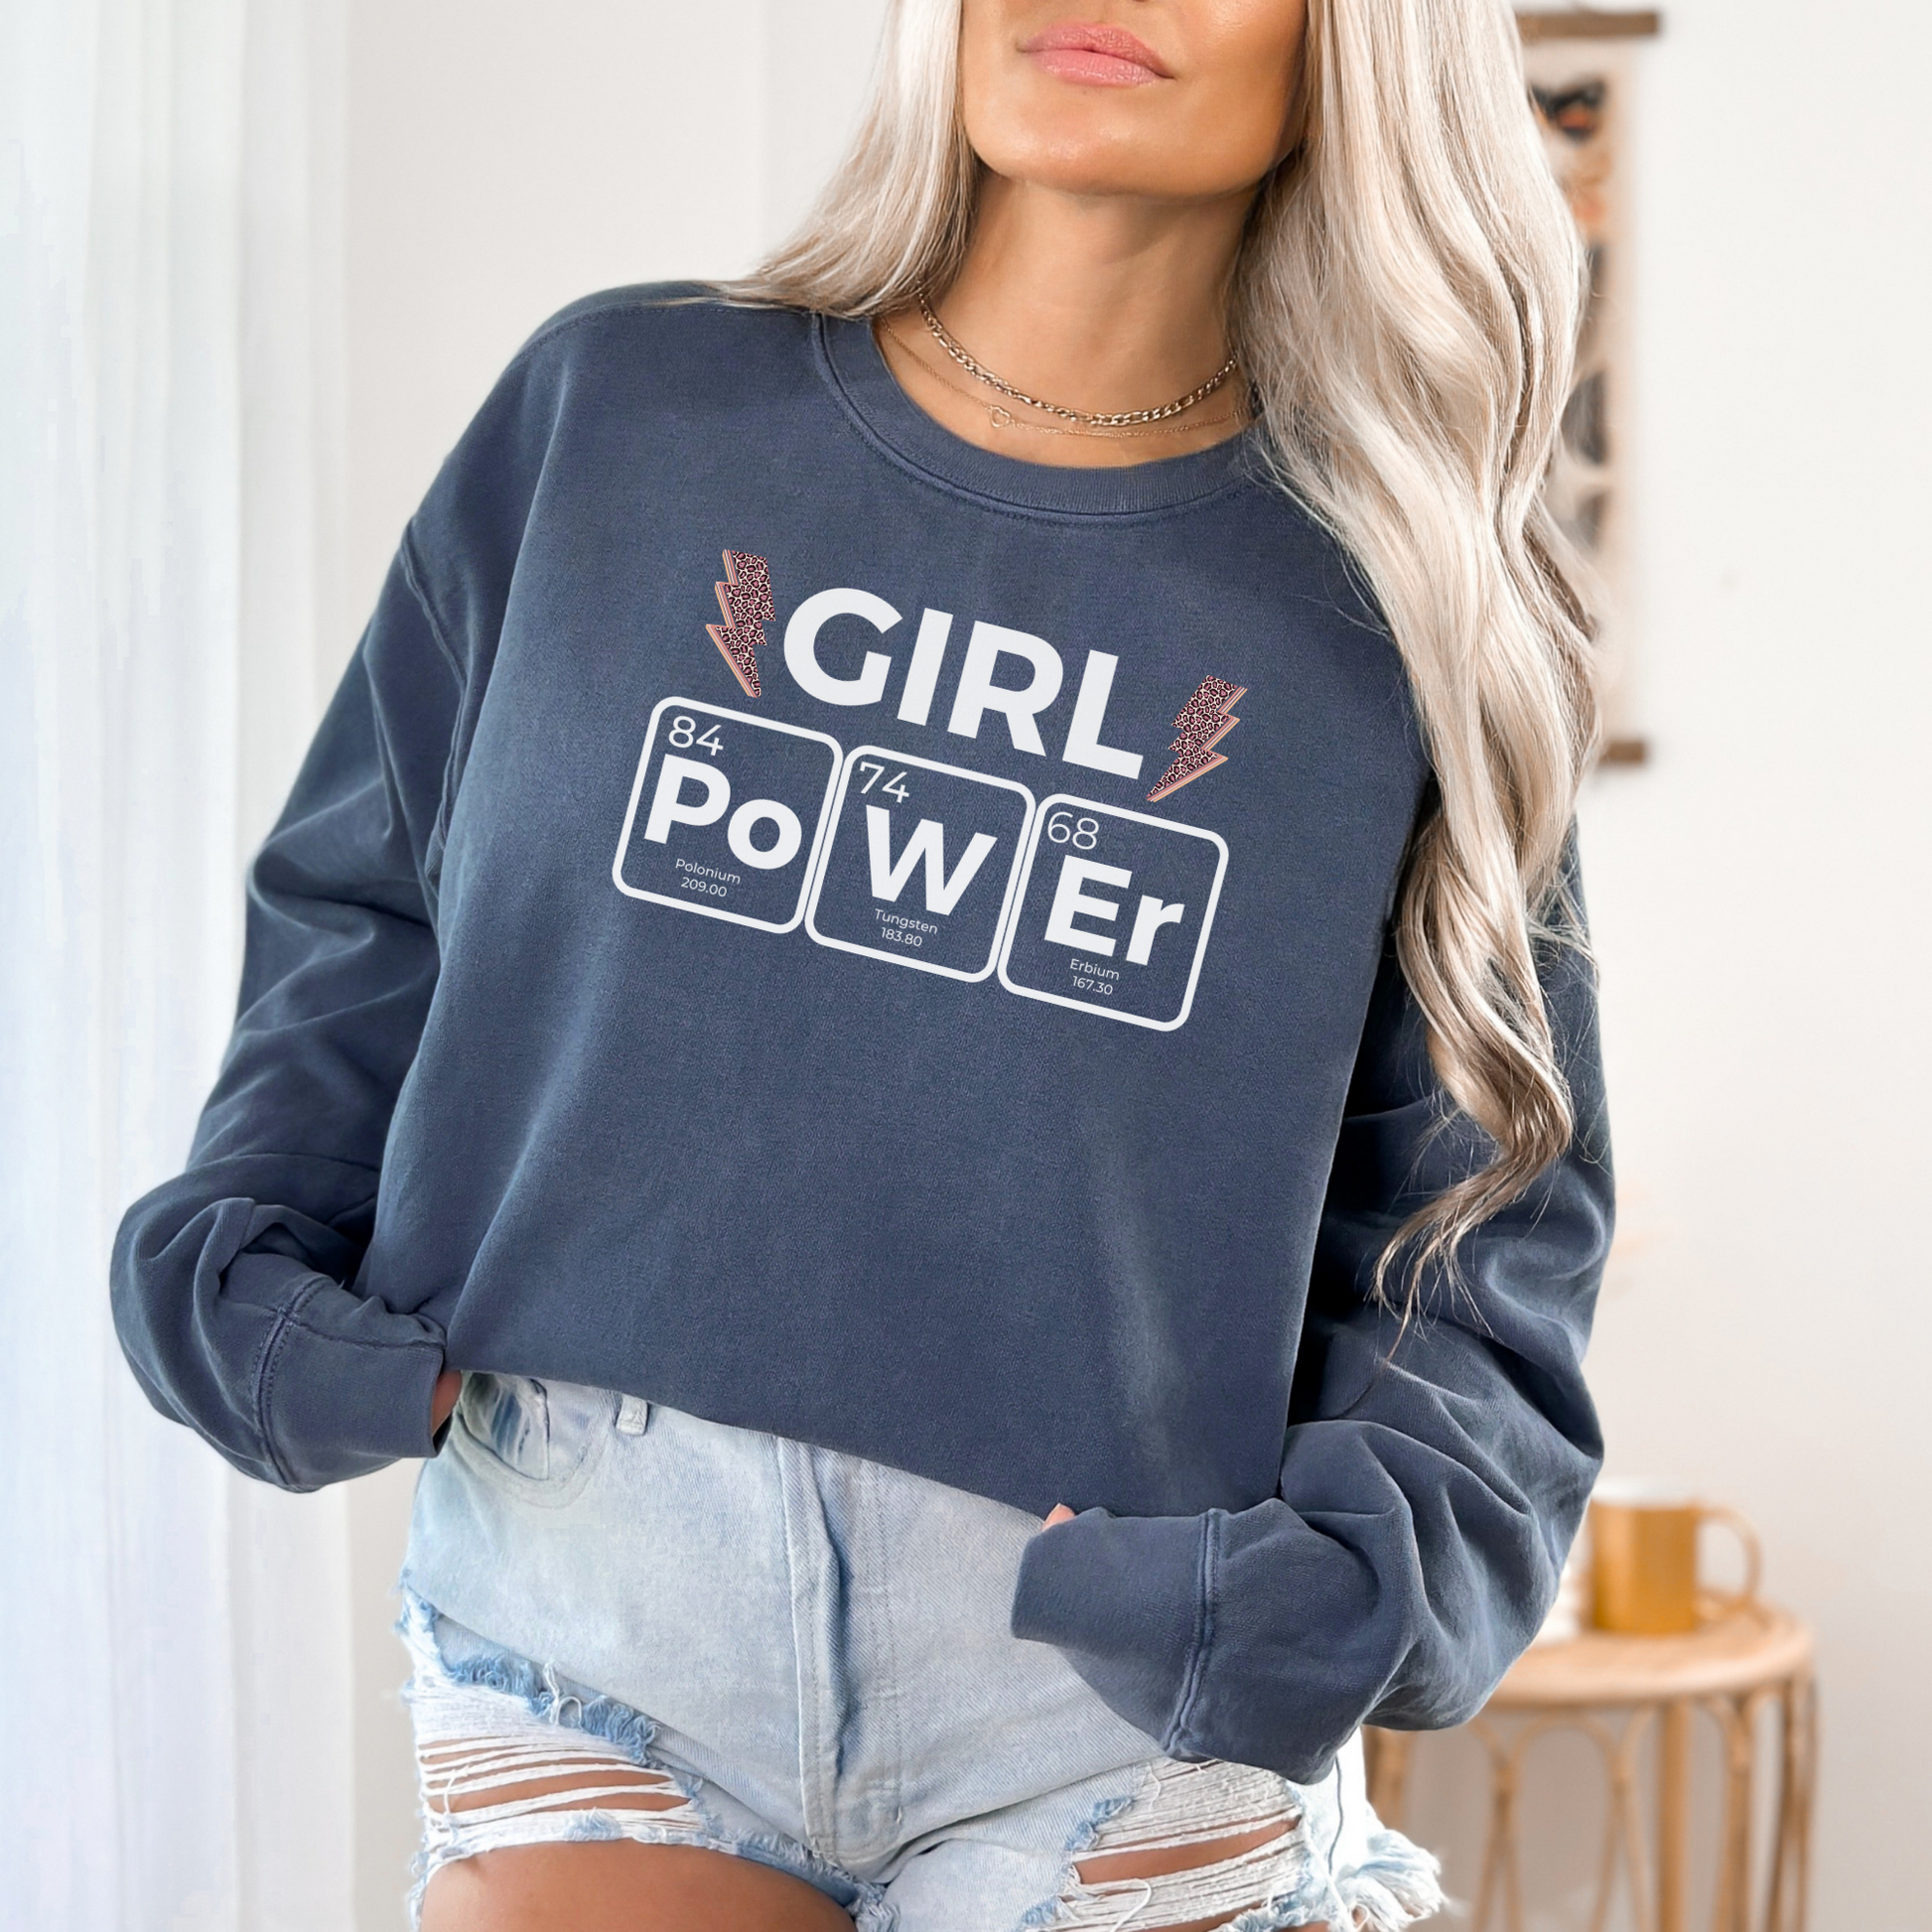 a woman wearing a sweatshirt that says girl power